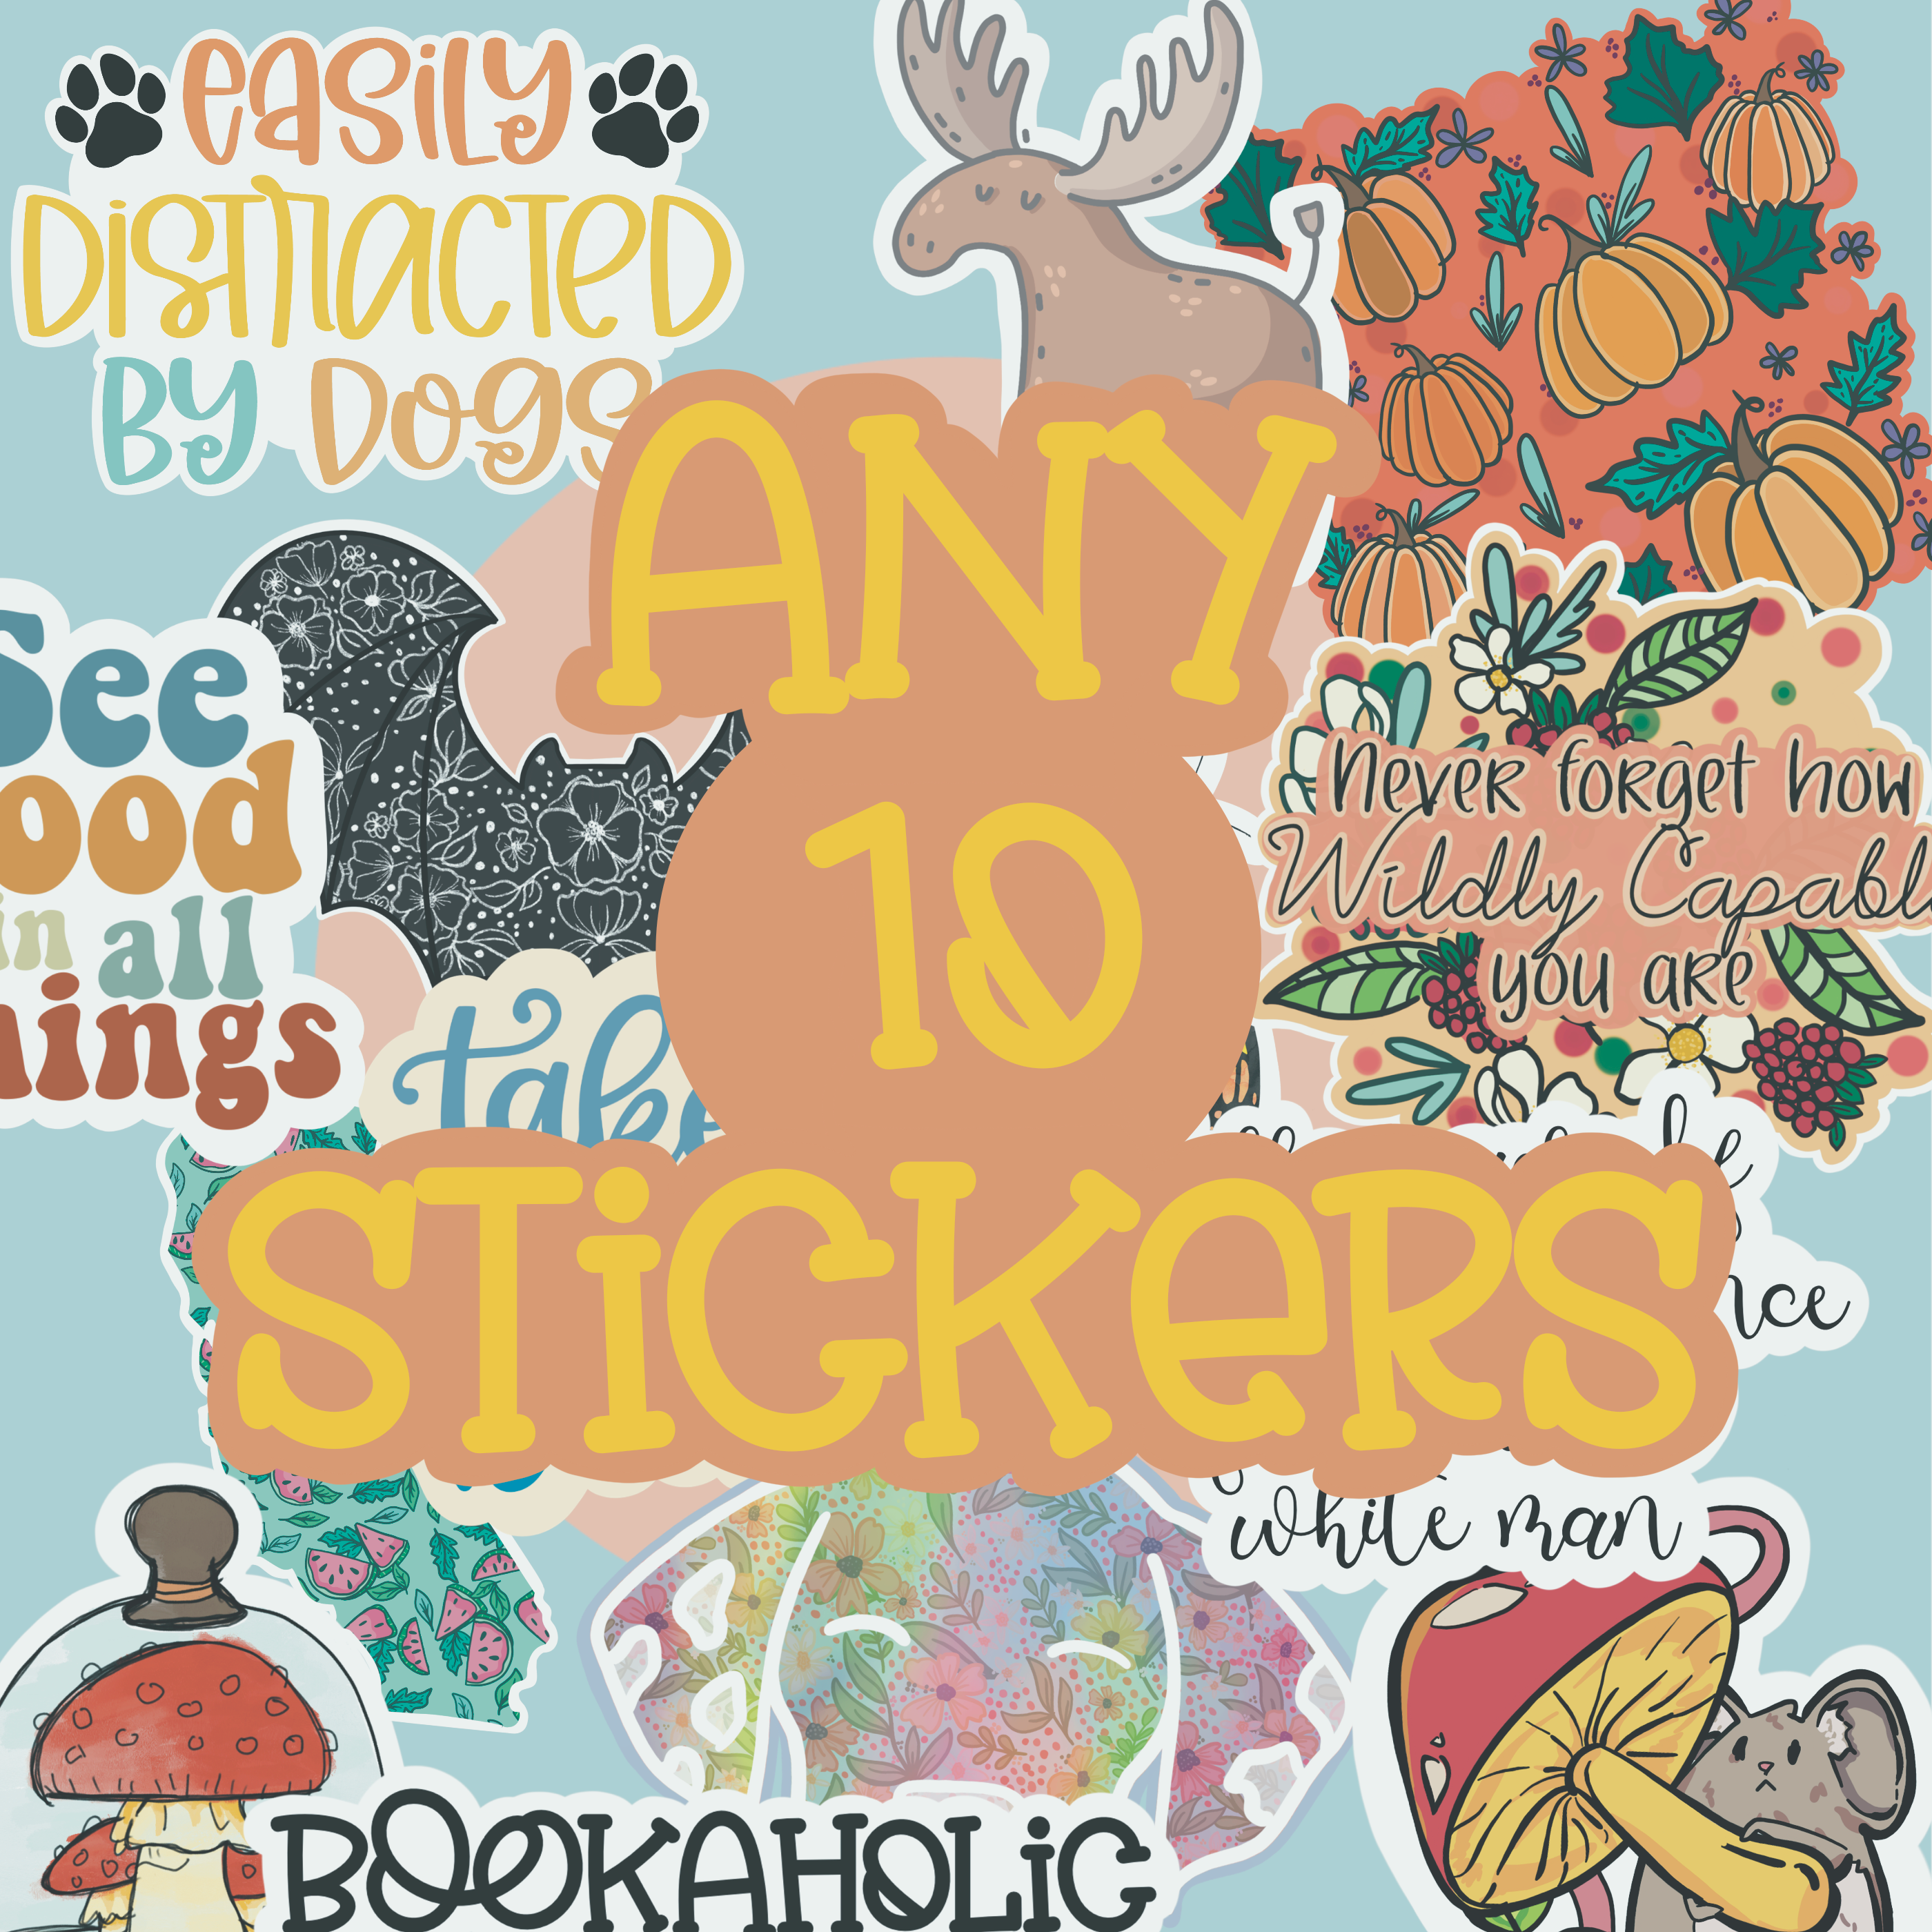 S'mores sticker sheet – Jenny V Stickers